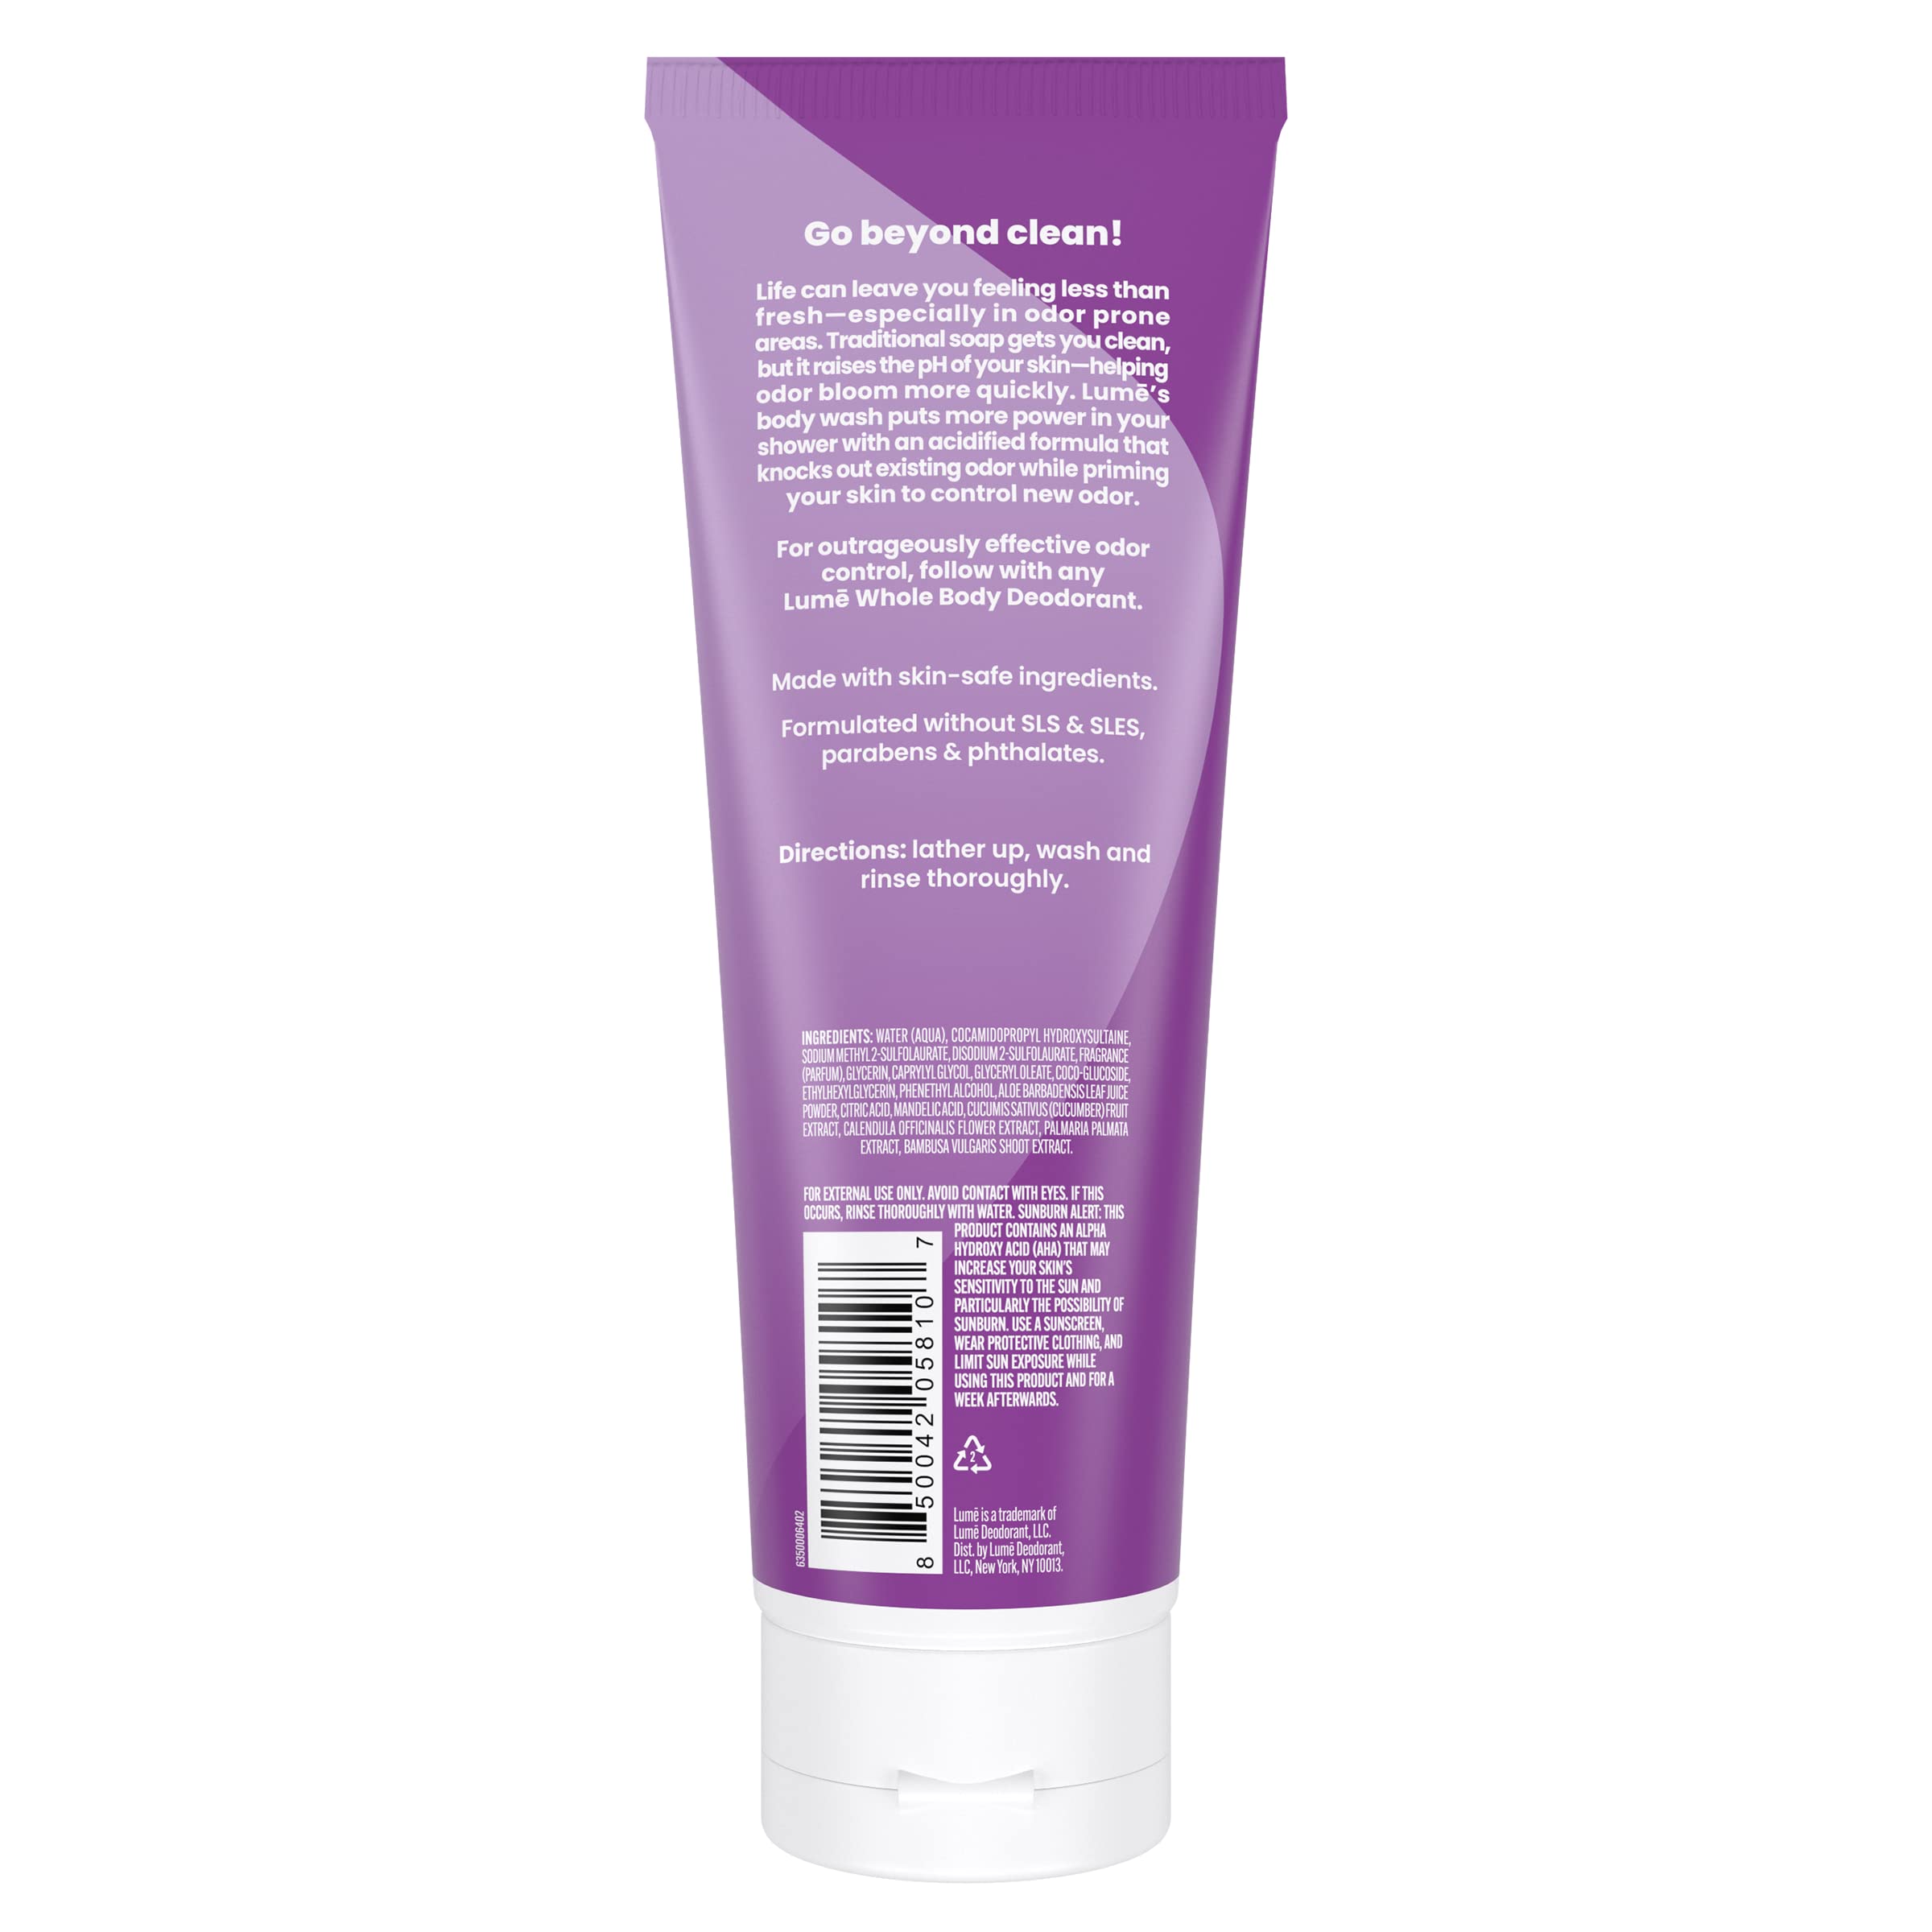 Lume Acidified Body Wash - 24 Hour Odor Control - Removes Odor Better than Soap - Moisturizing Formula - SLS Free, Paraben Free - Safe For Sensitive Skin - 8.5 ounce (Lavender Sage)